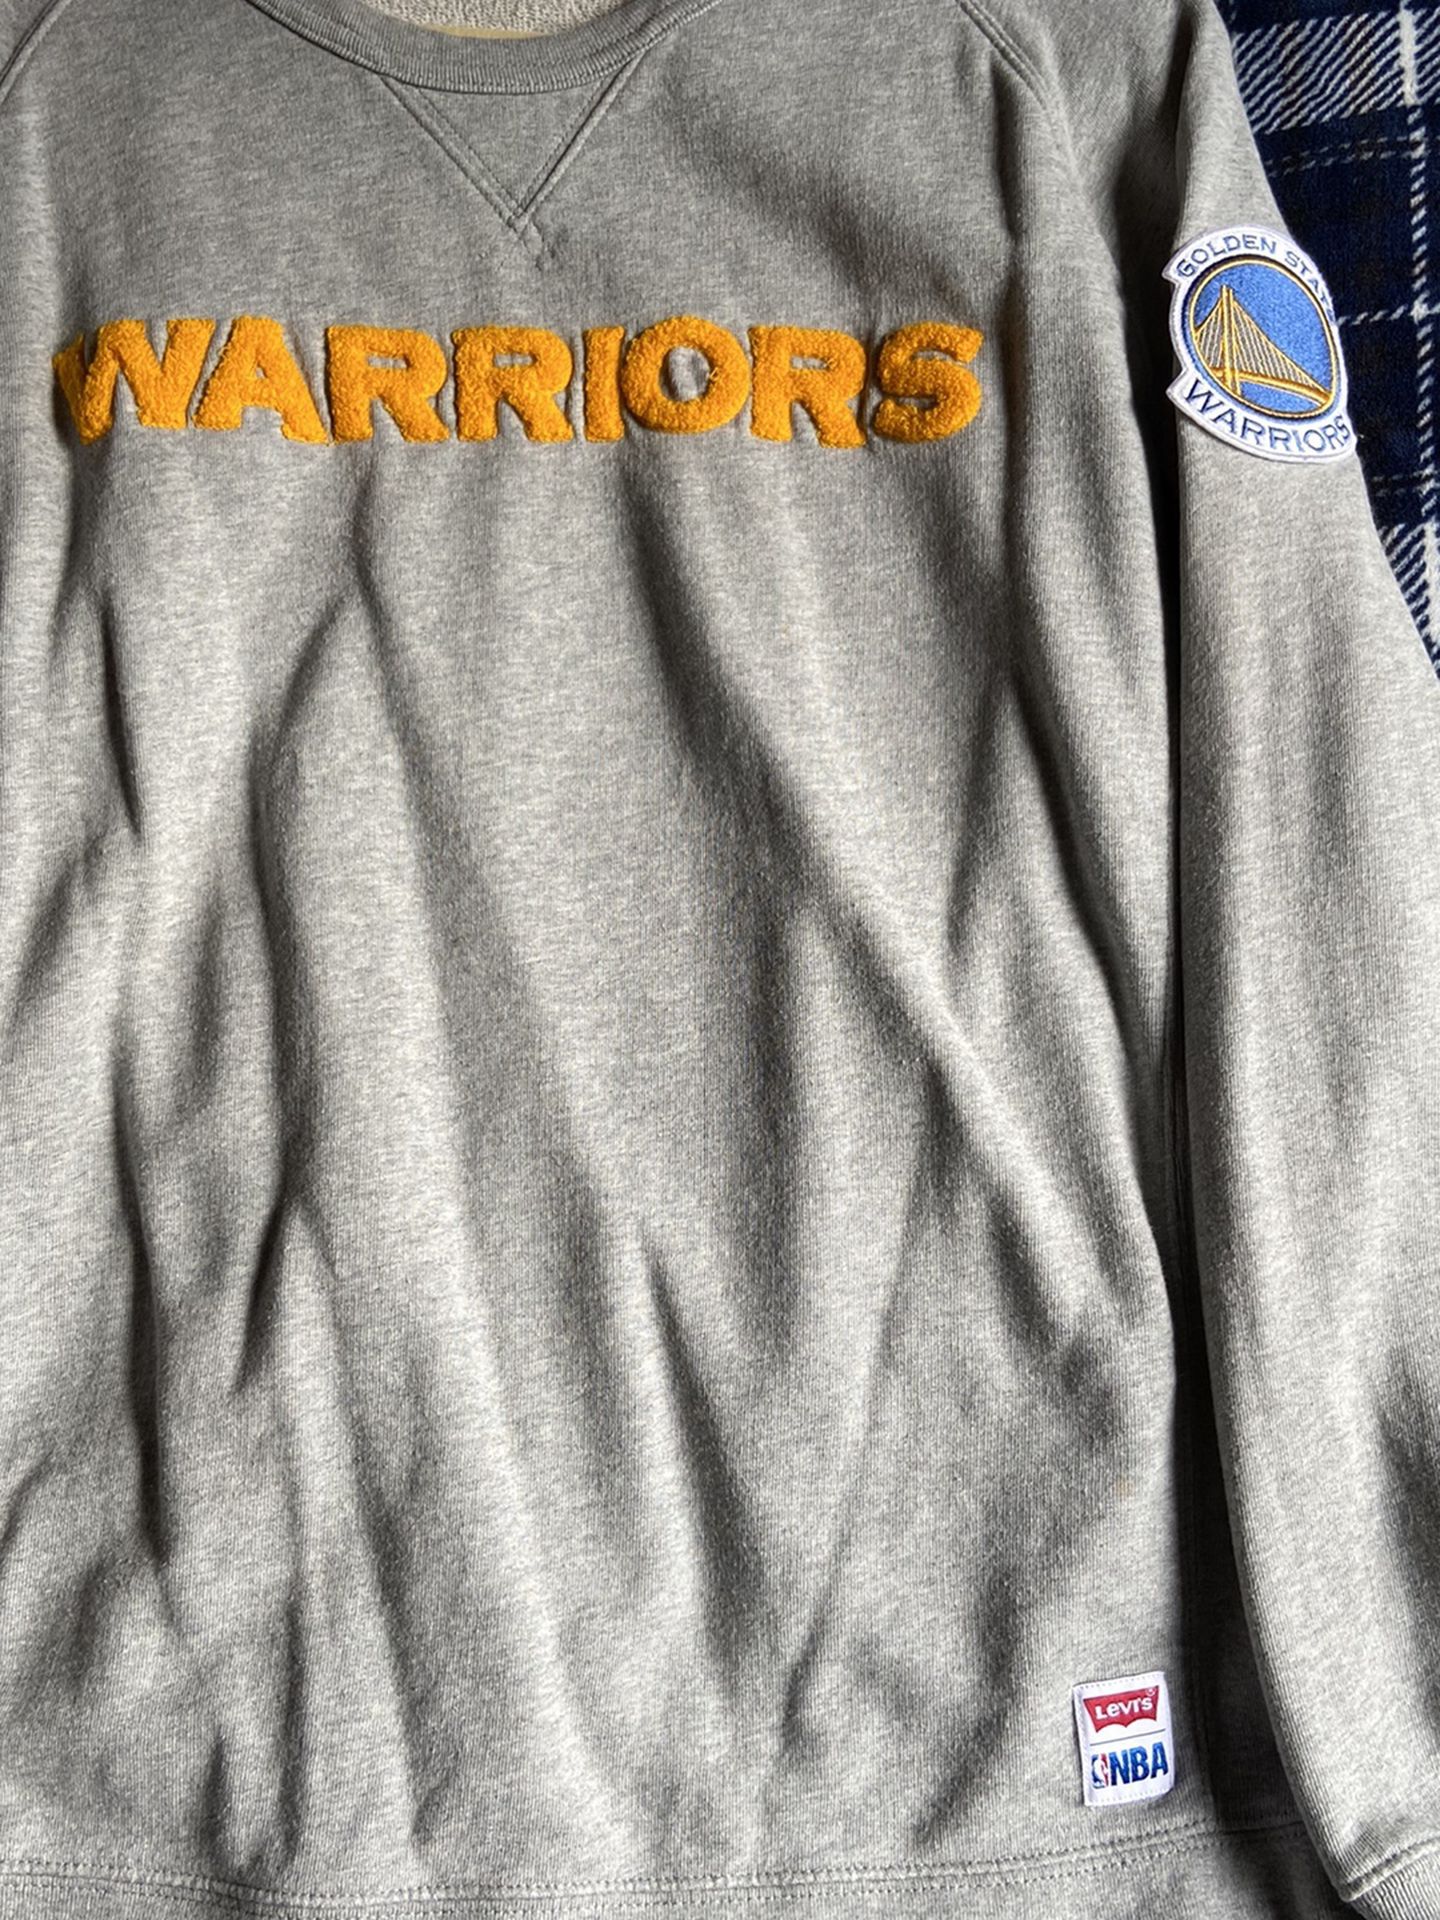 Levis Golden State Warriors Sweater L